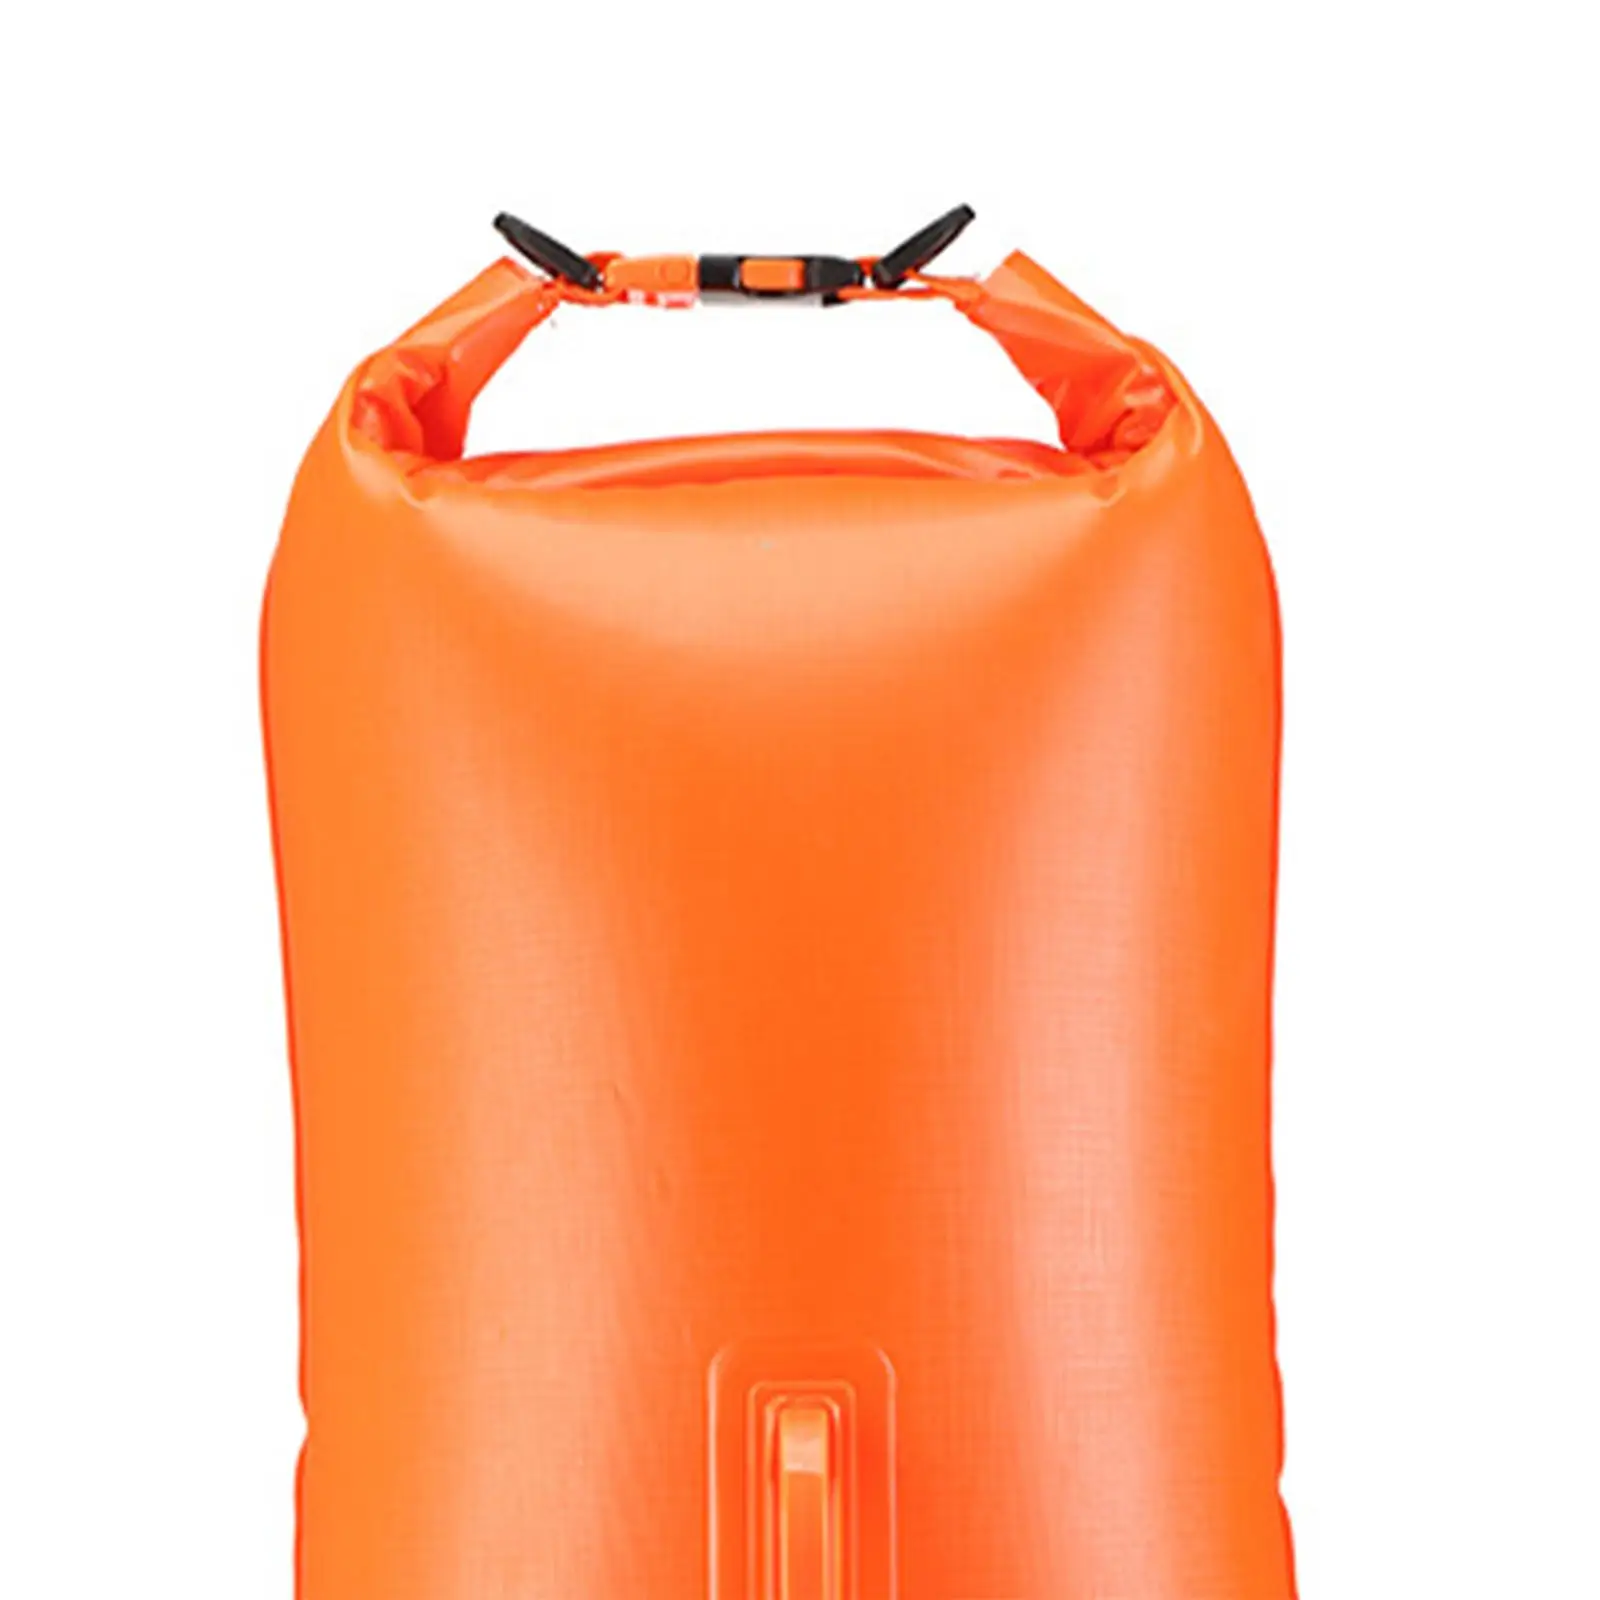 Safety Swim Buoy Waterproof Bag Waterproof Storage Bag Double Air Bag Swimming Tow Bag for Fishing Outdoor Camping Rafting Kayak